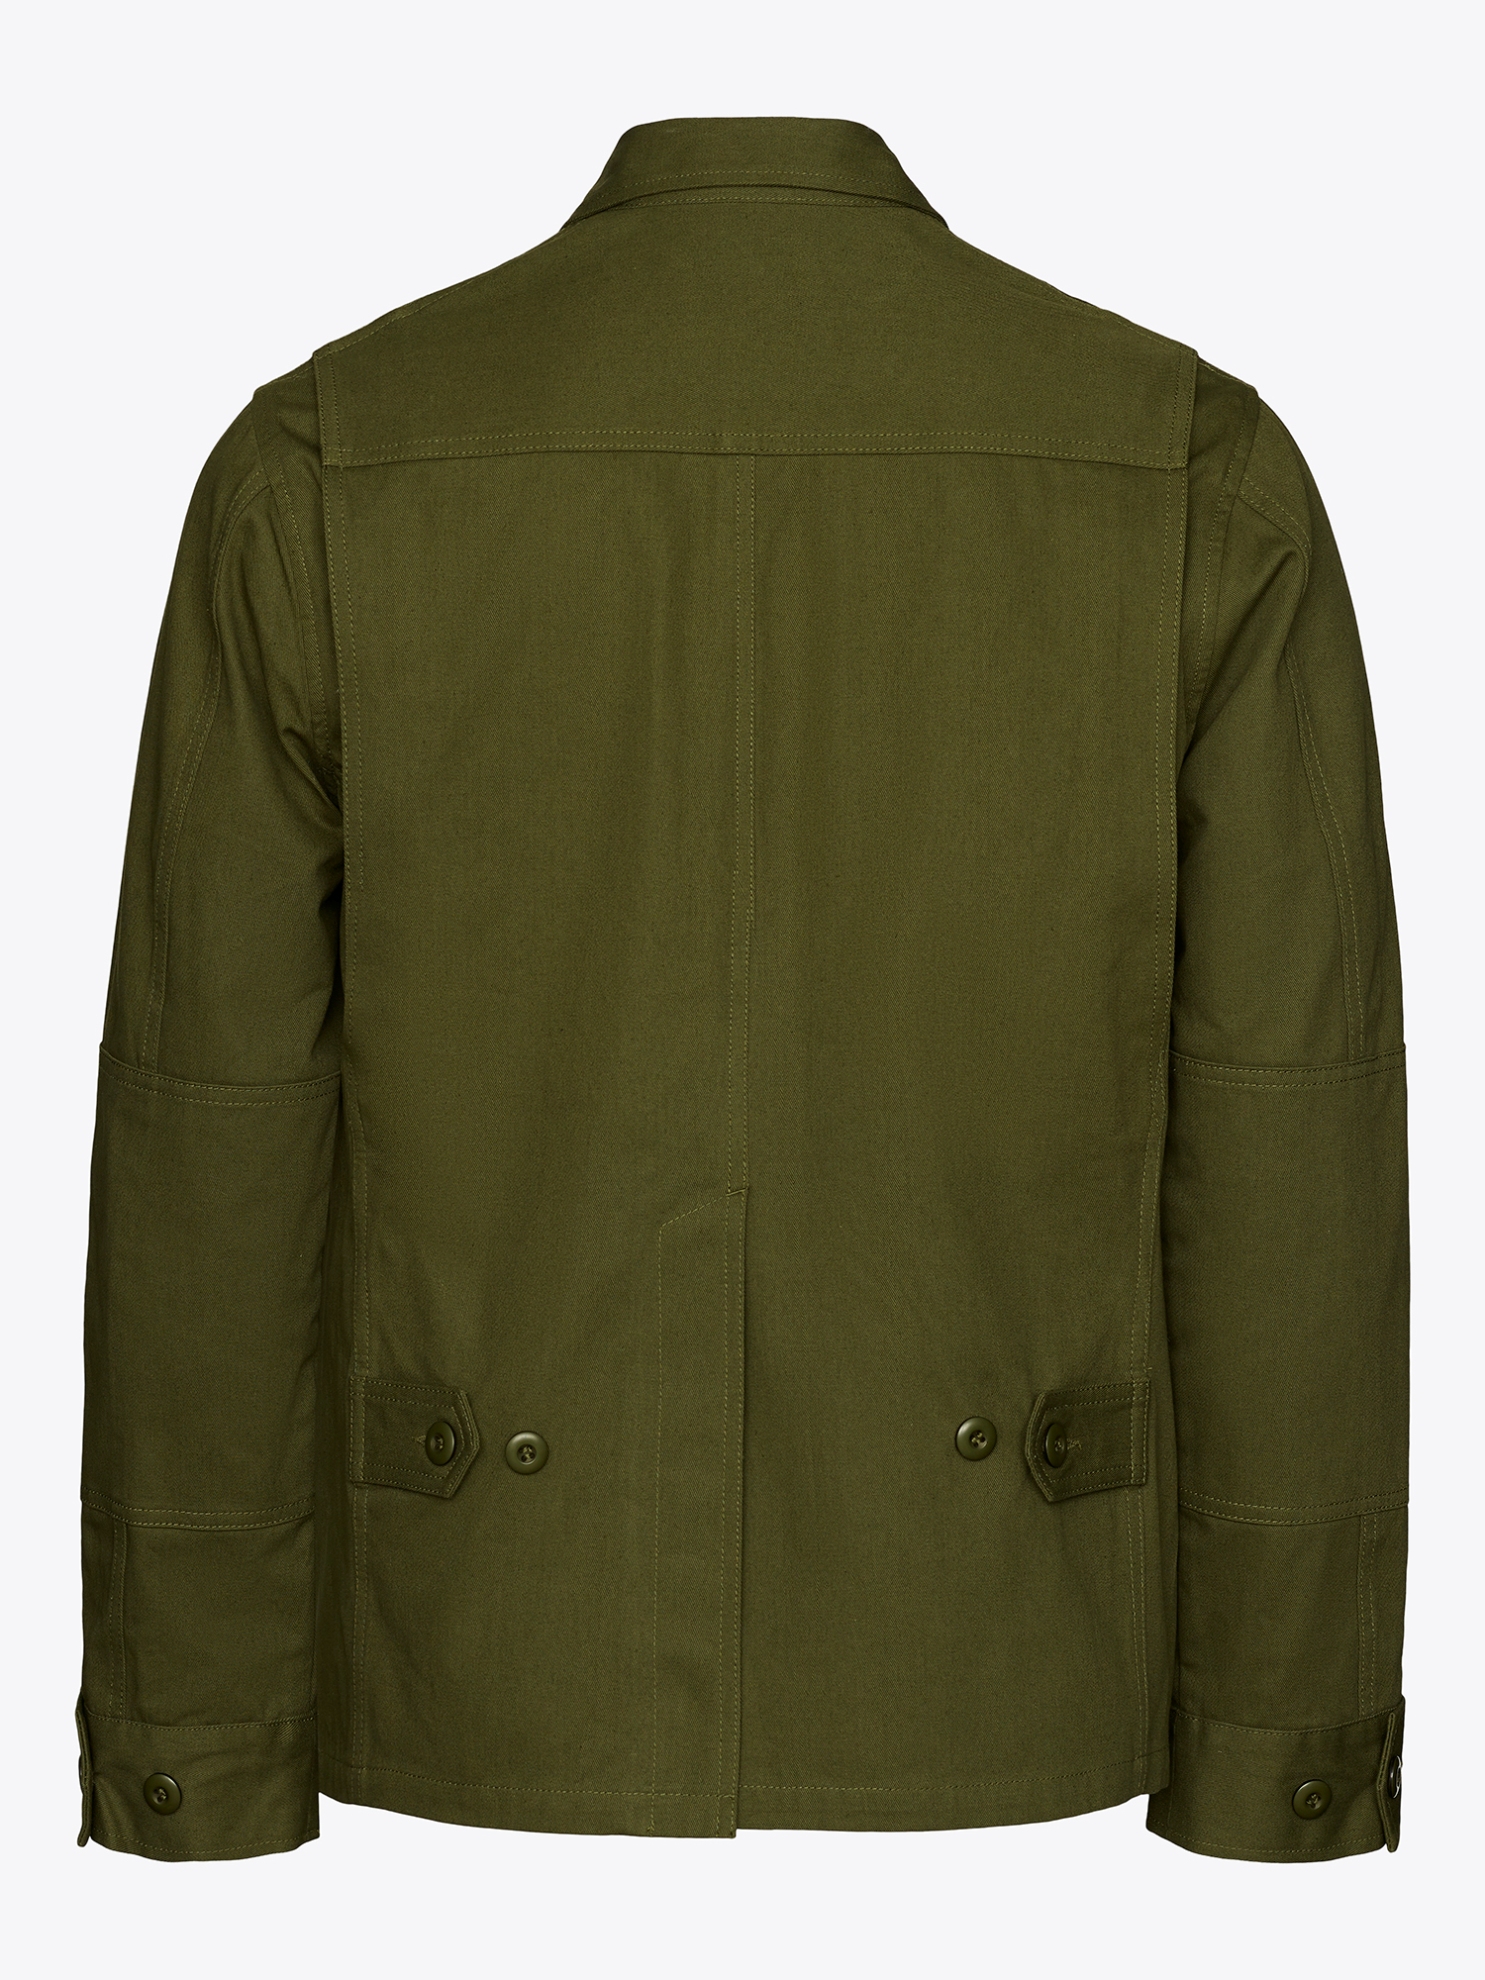 Jungle jacket enhanced - army green OG107